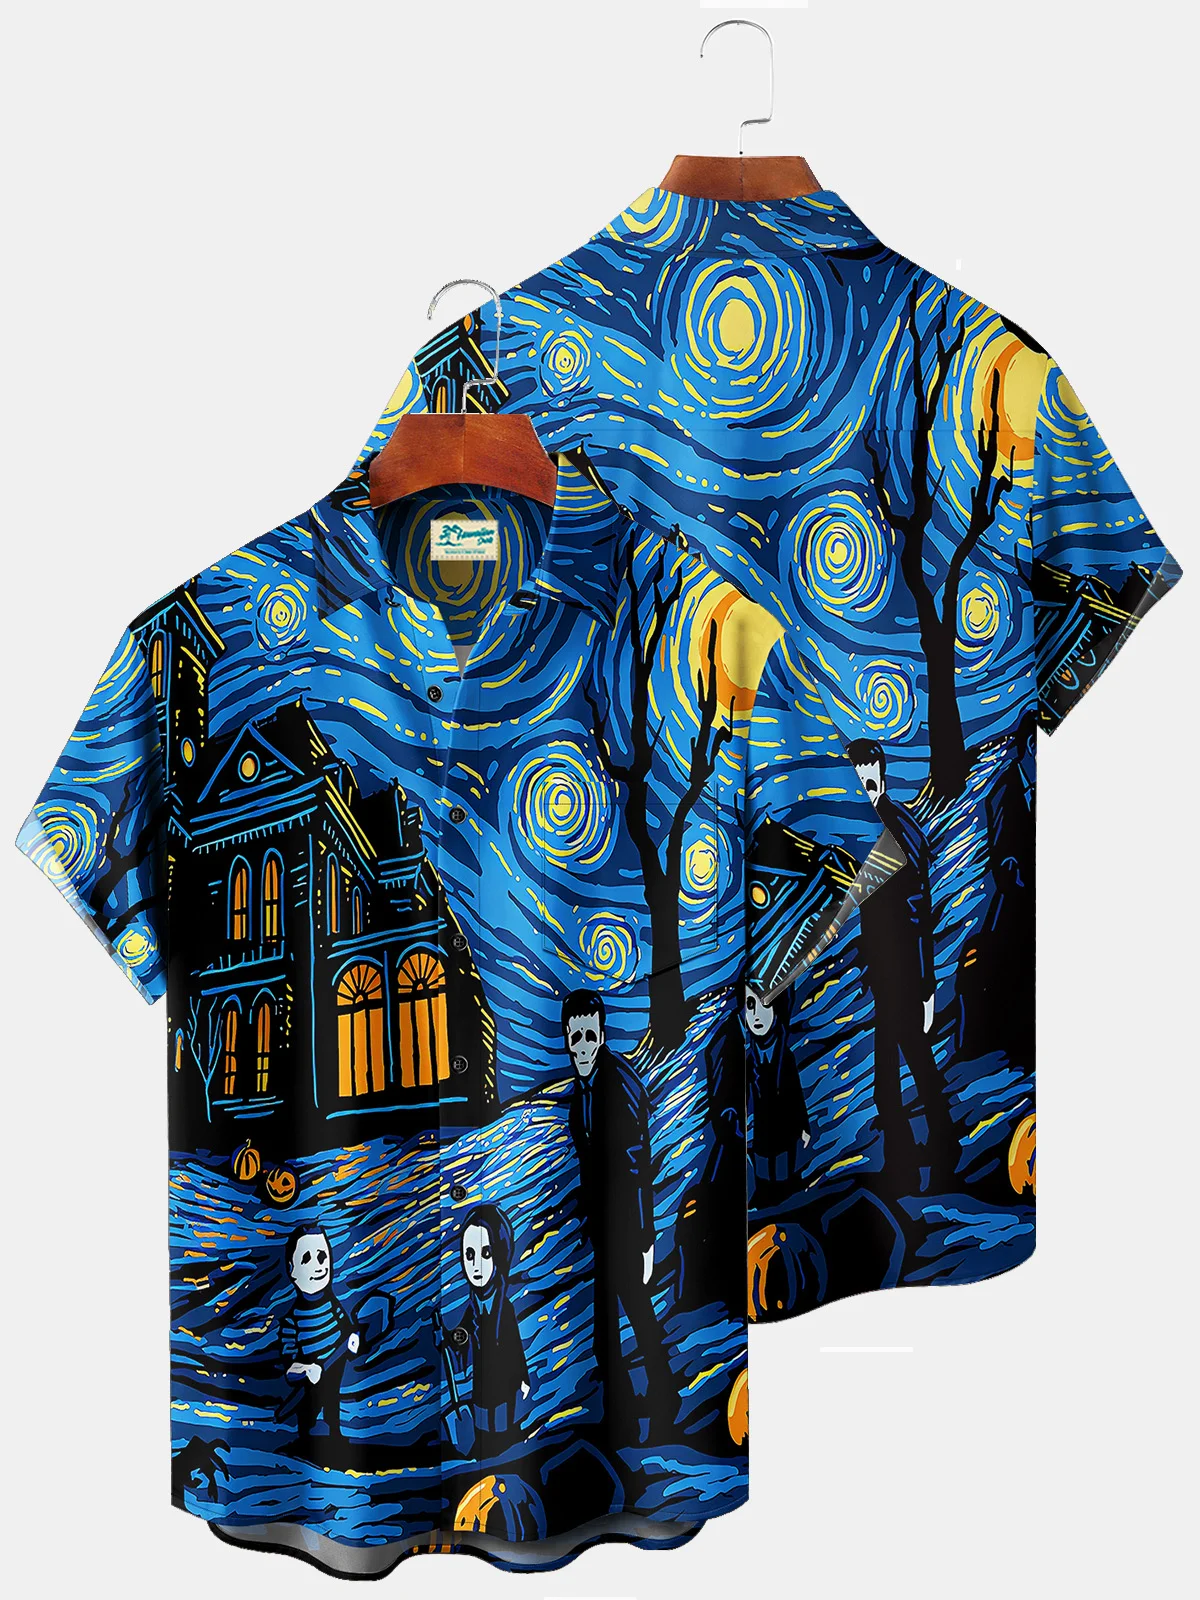 Royaura Holiday Blue Halloween Men's Hawaiian Shirts Ghost Zombie Cartoon Art Moon Stretch Plus Size Aloha Camp Shirts